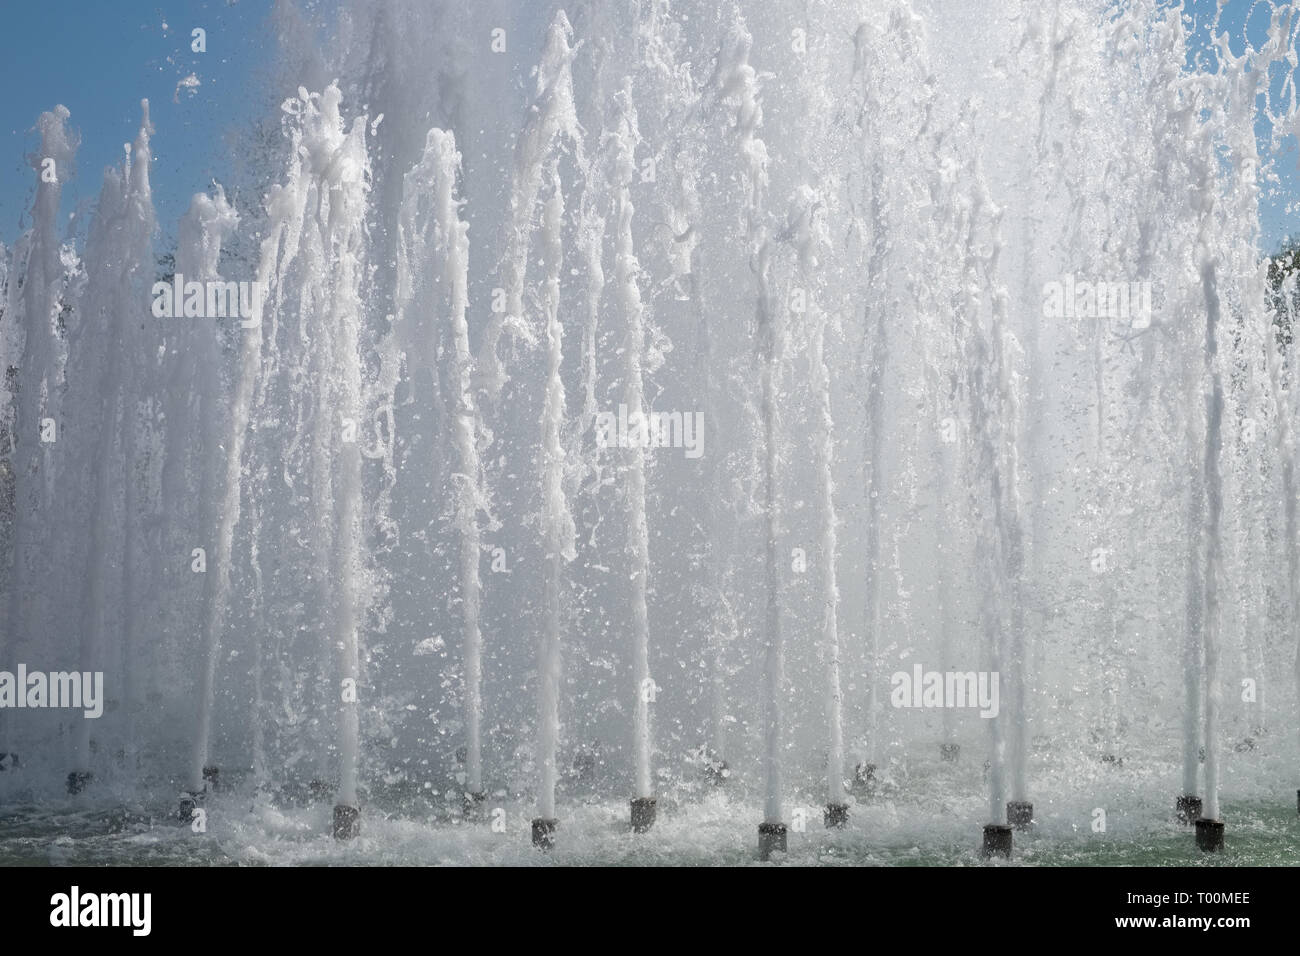 Splashes of water fountain. Stock Photo